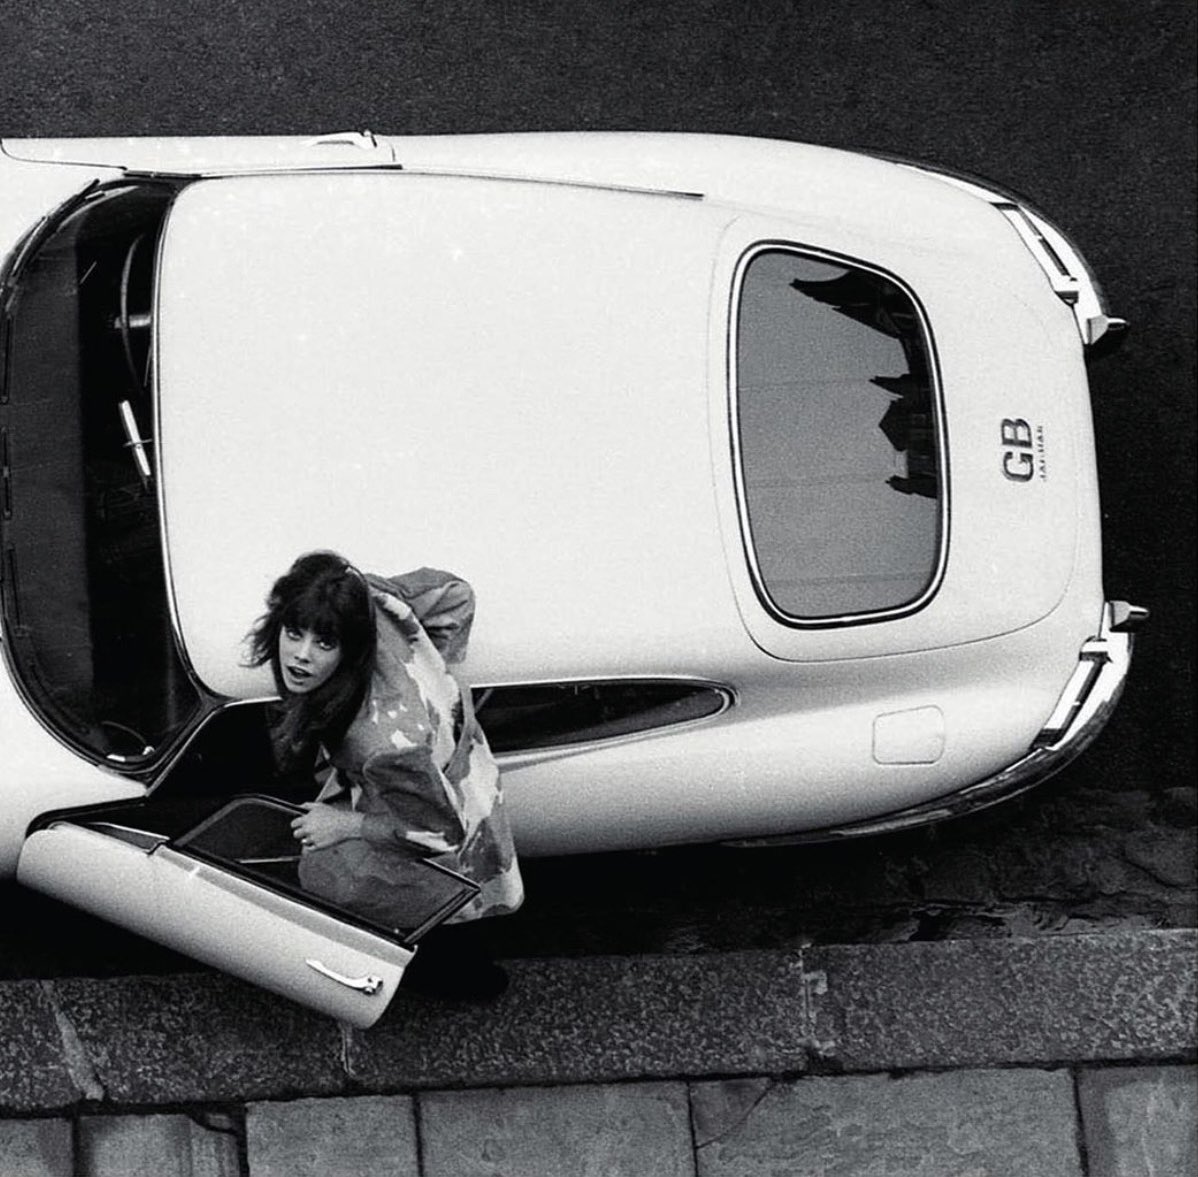 A girl on the go. #JaneBirkin hops in her Jaguar E-Type, 1965. #OPInspiration